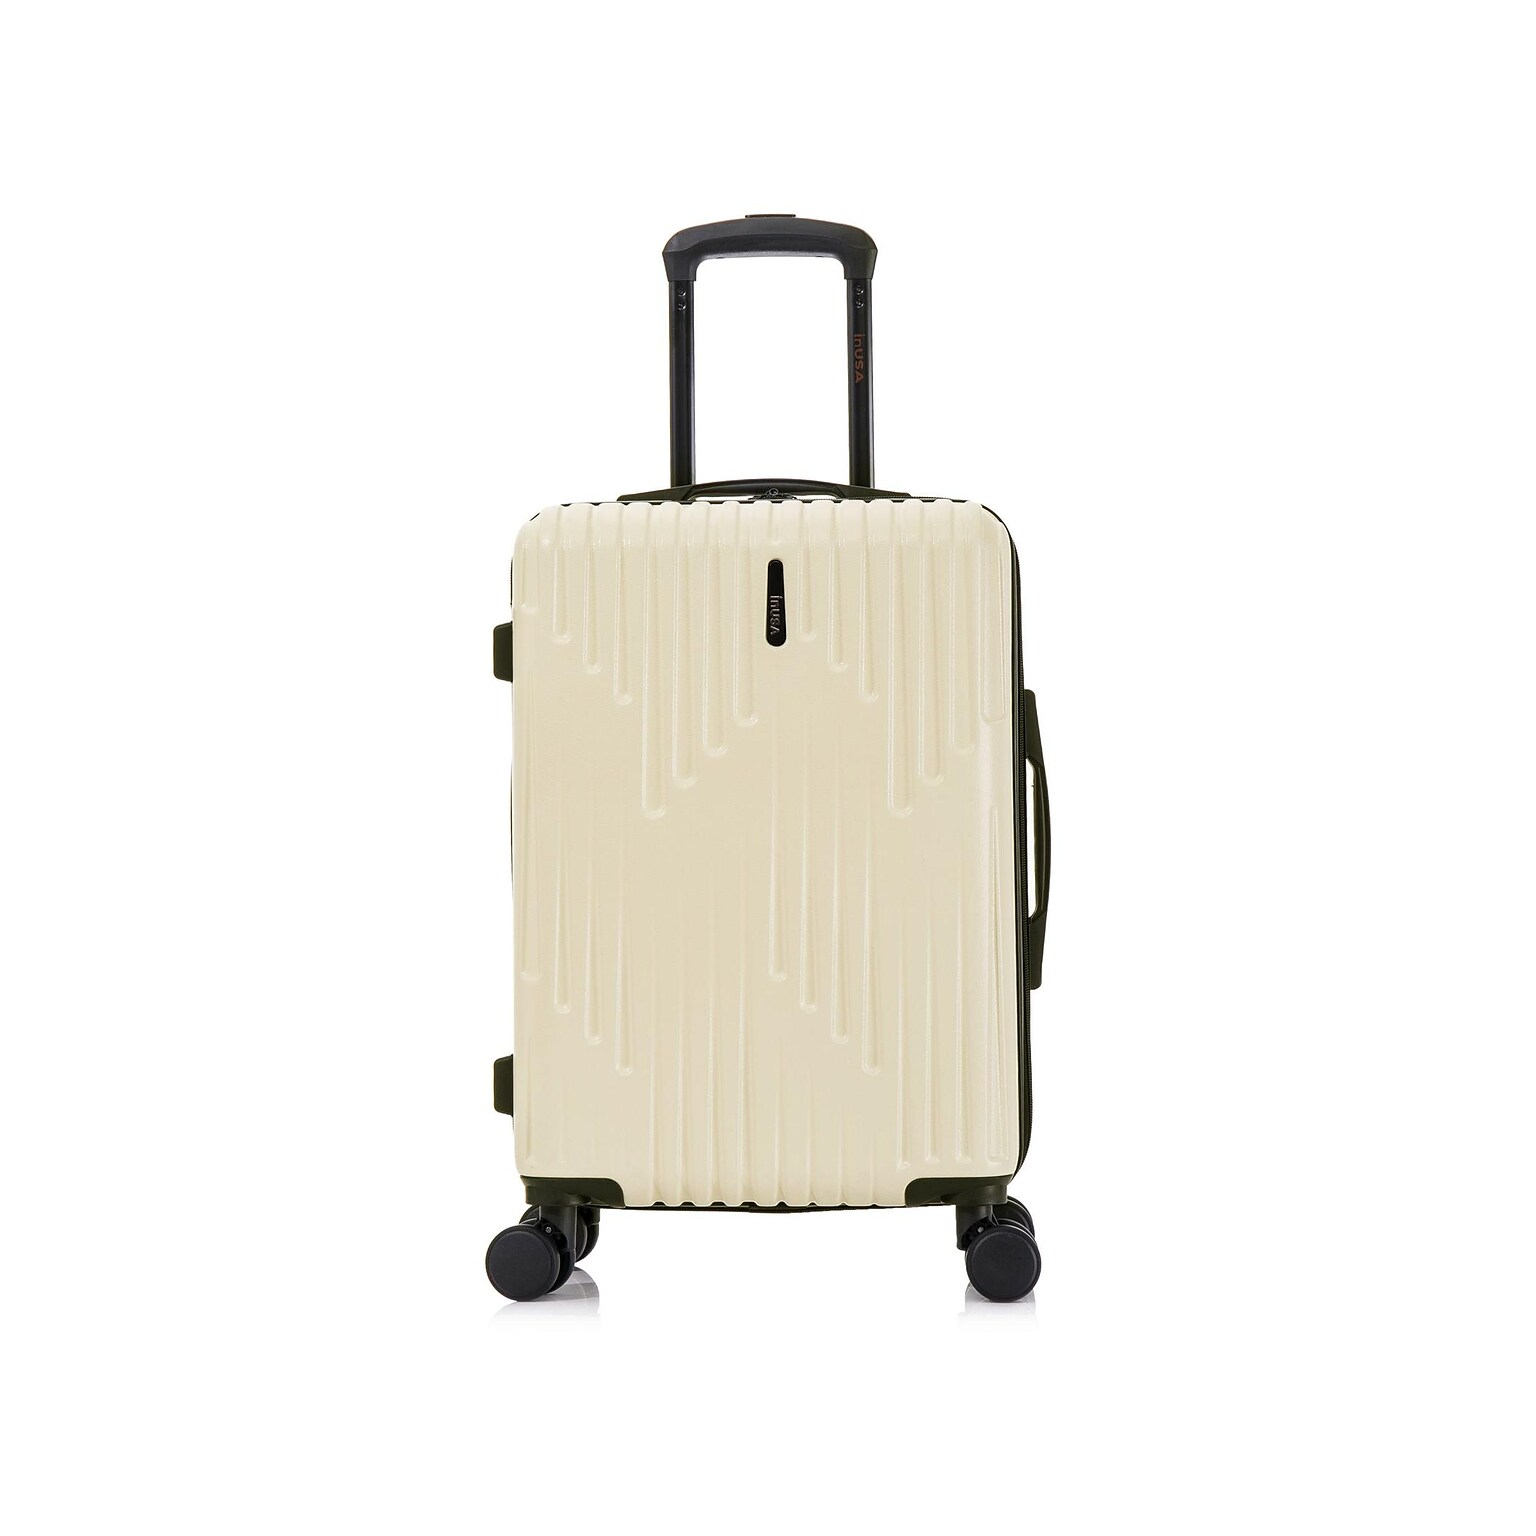 InUSA Drip 22.44 Hardside Carry-On Suitcase, 4-Wheeled Spinner, Sand (IUDRI00S-SAN)